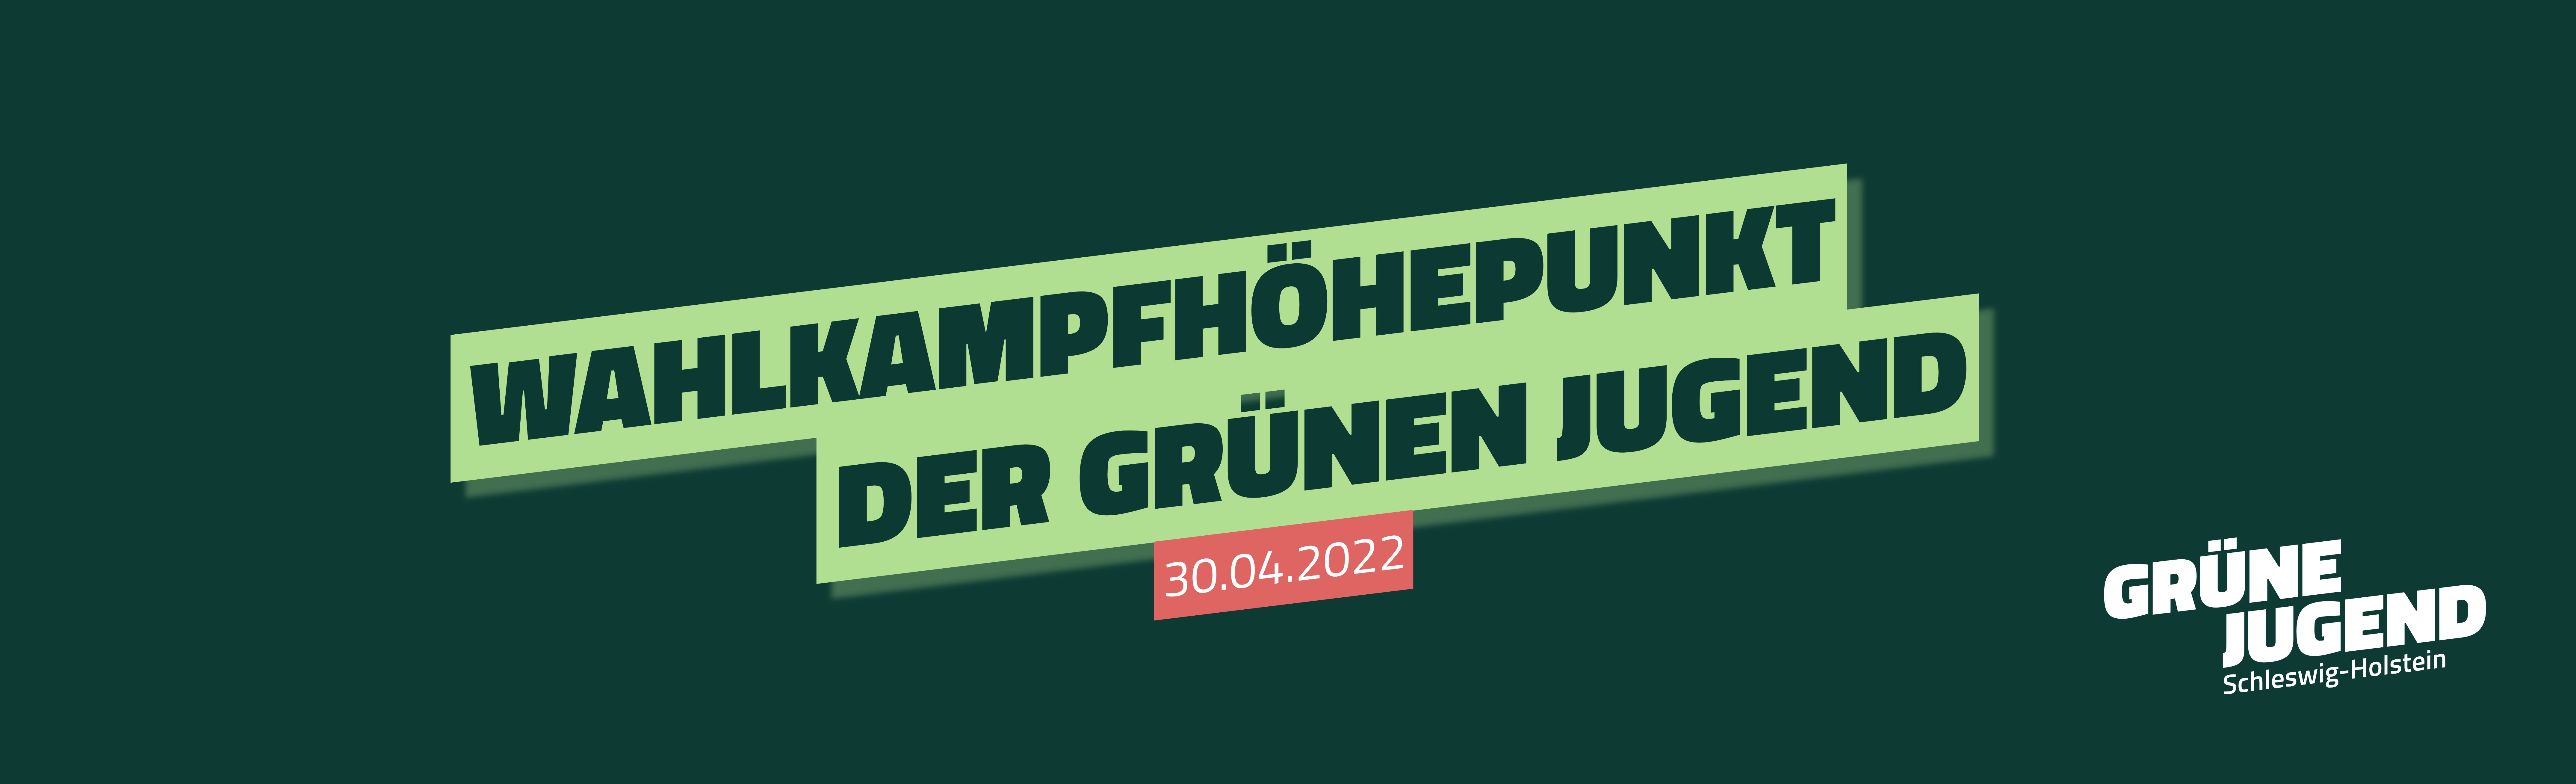 Pressemitteilung zum Wahlkampfhöhepunkt der GRÜNEN JUGEND am 30.04.